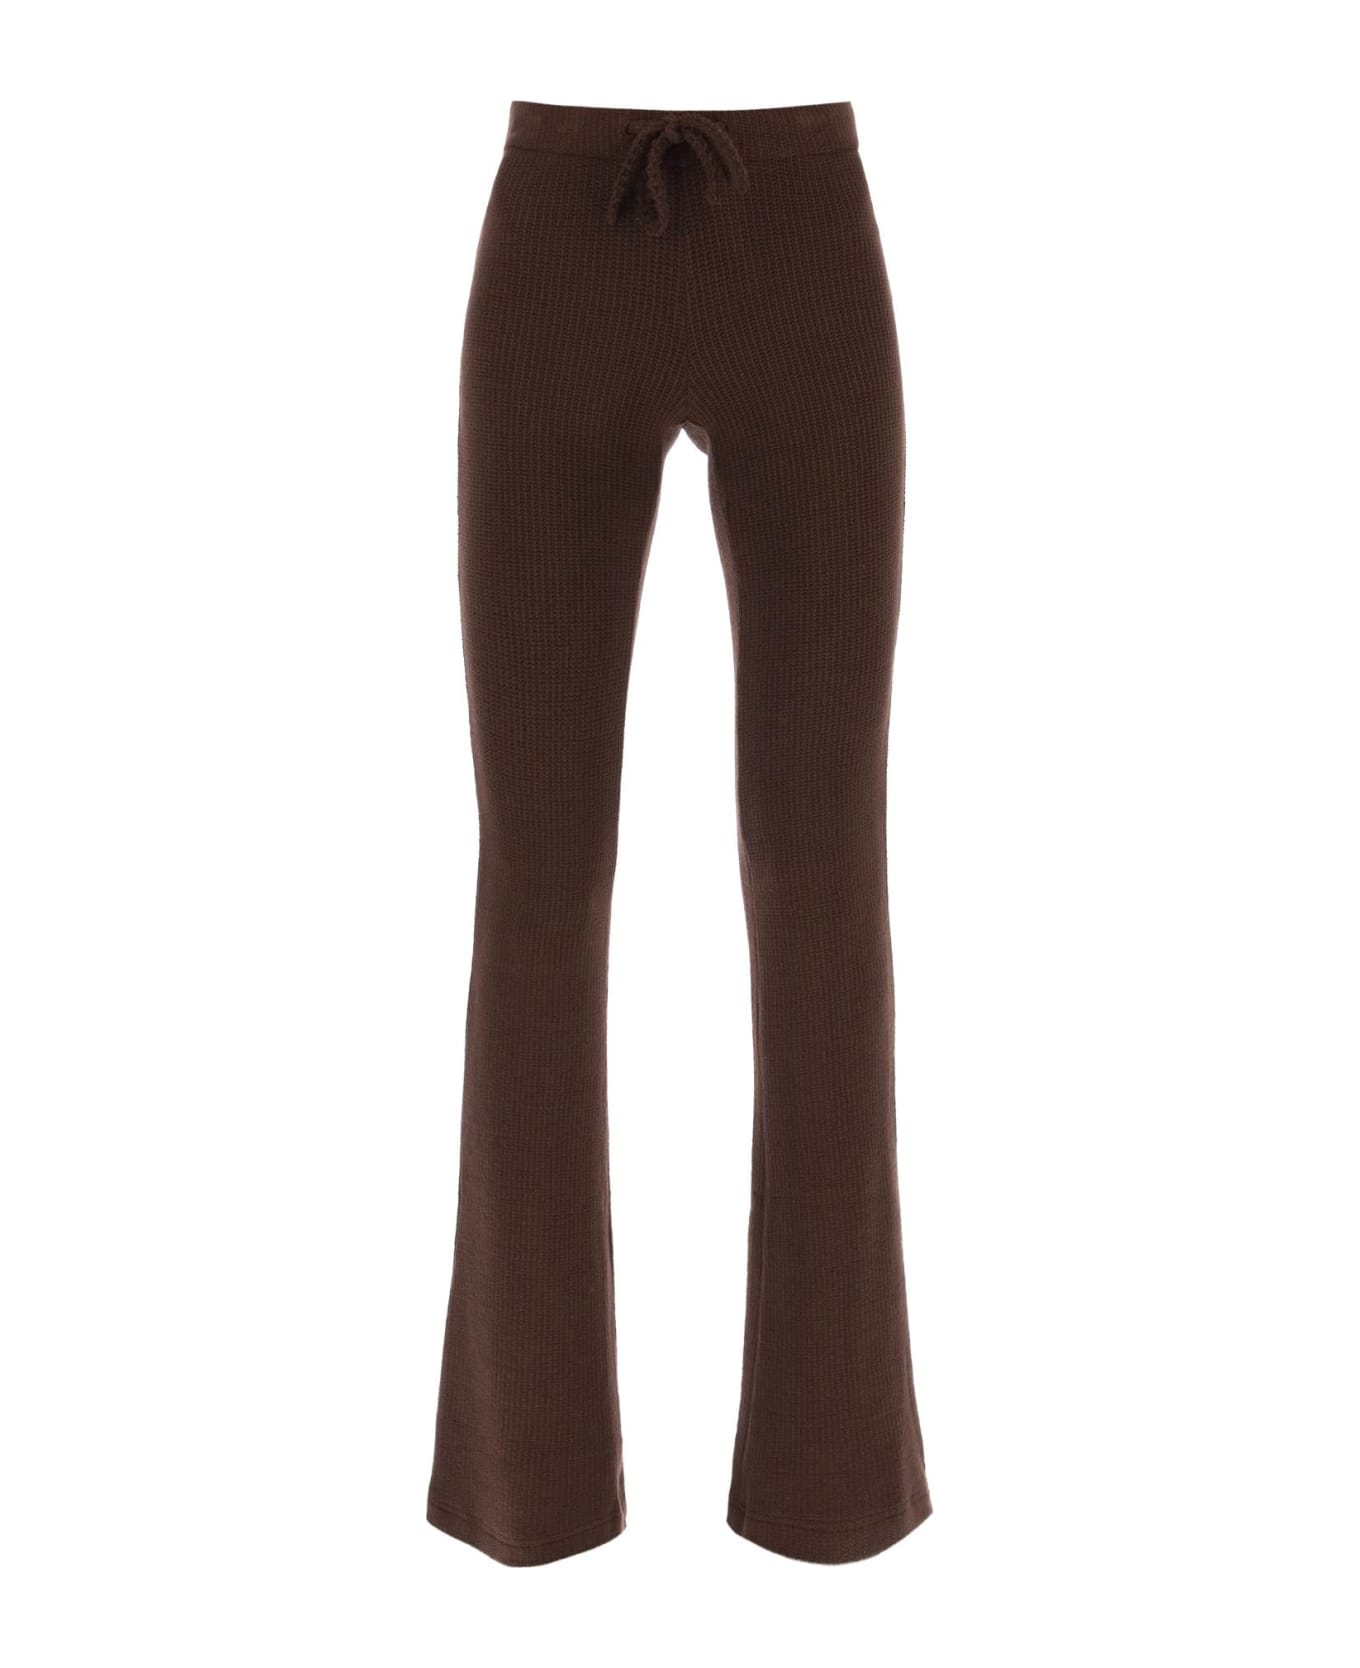 SIEDRES 'flo' Knitted Pants - BROWN (Brown)